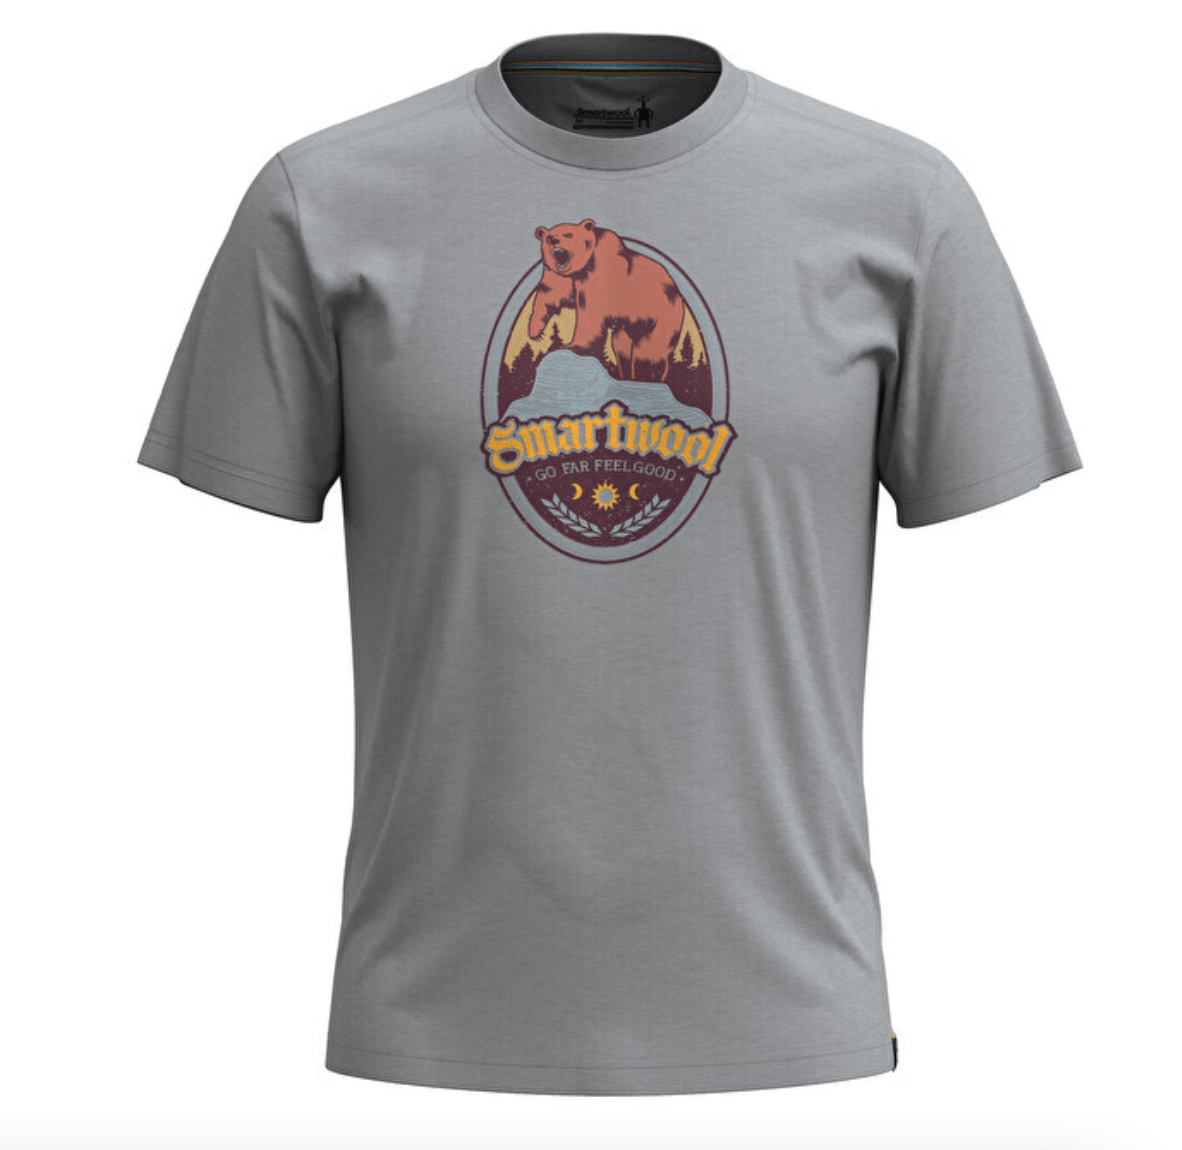 Smartwool T-Shirt M / LIGHT GRAY HEATHER Smartwool Bear Attack Graphic Short Sleeve Tee Slim Fit